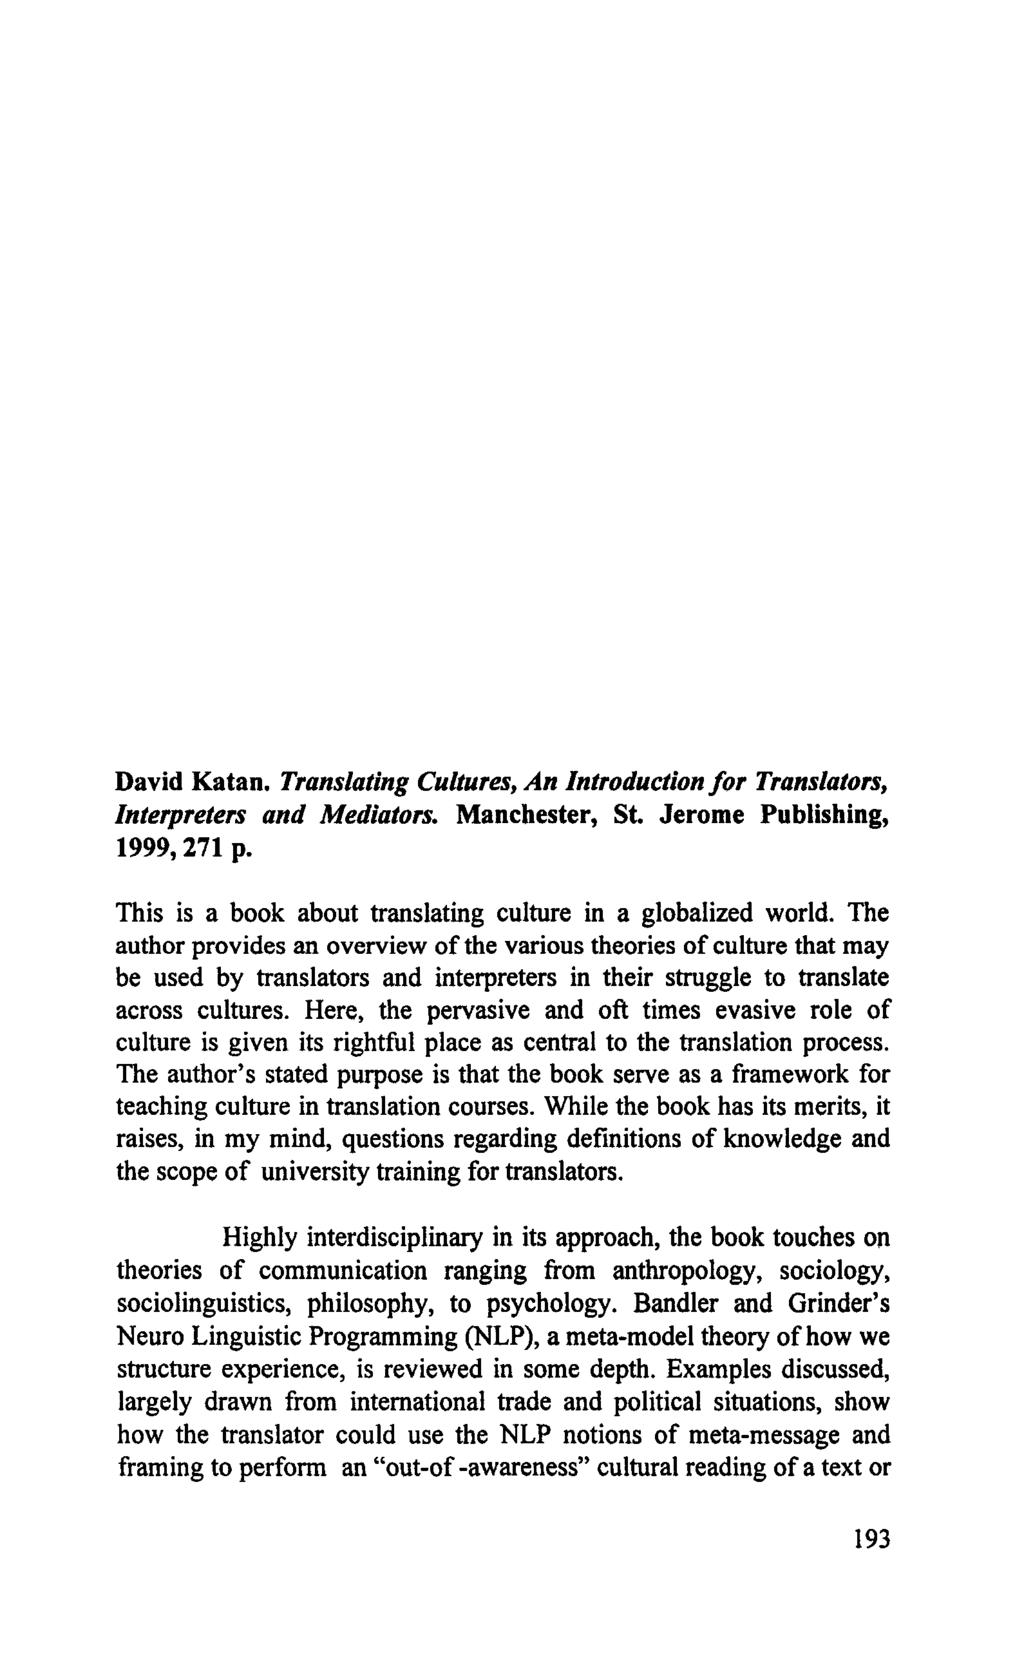 David Katan. Translating Cultures, An Introduction for Translators, Interpreters and Mediators. Manchester, St. Jerome Publishing, 1999,271p.